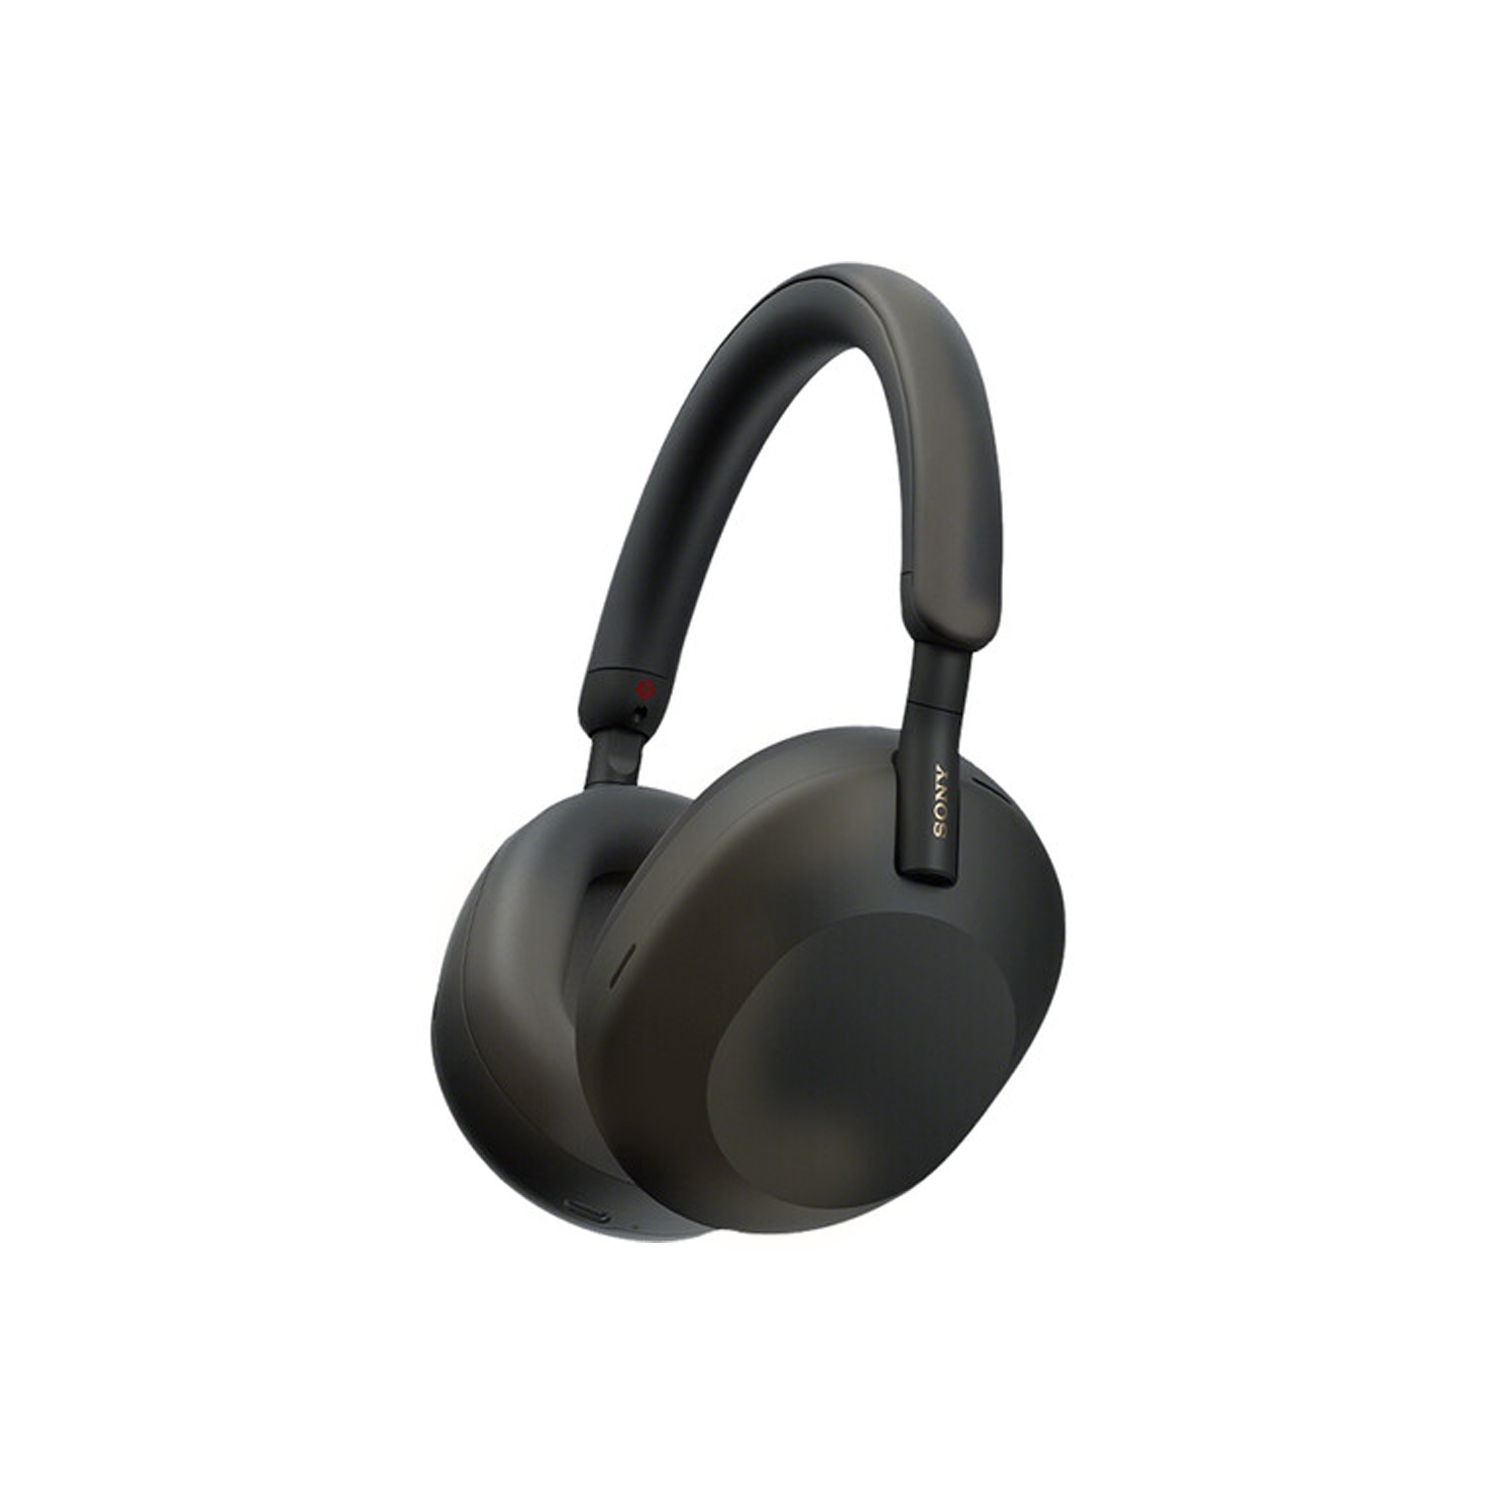 Sony WH-1000XM5 Noise-Canceling Wireless Over-Ear Headphones (Black) - International Model (Open Box)